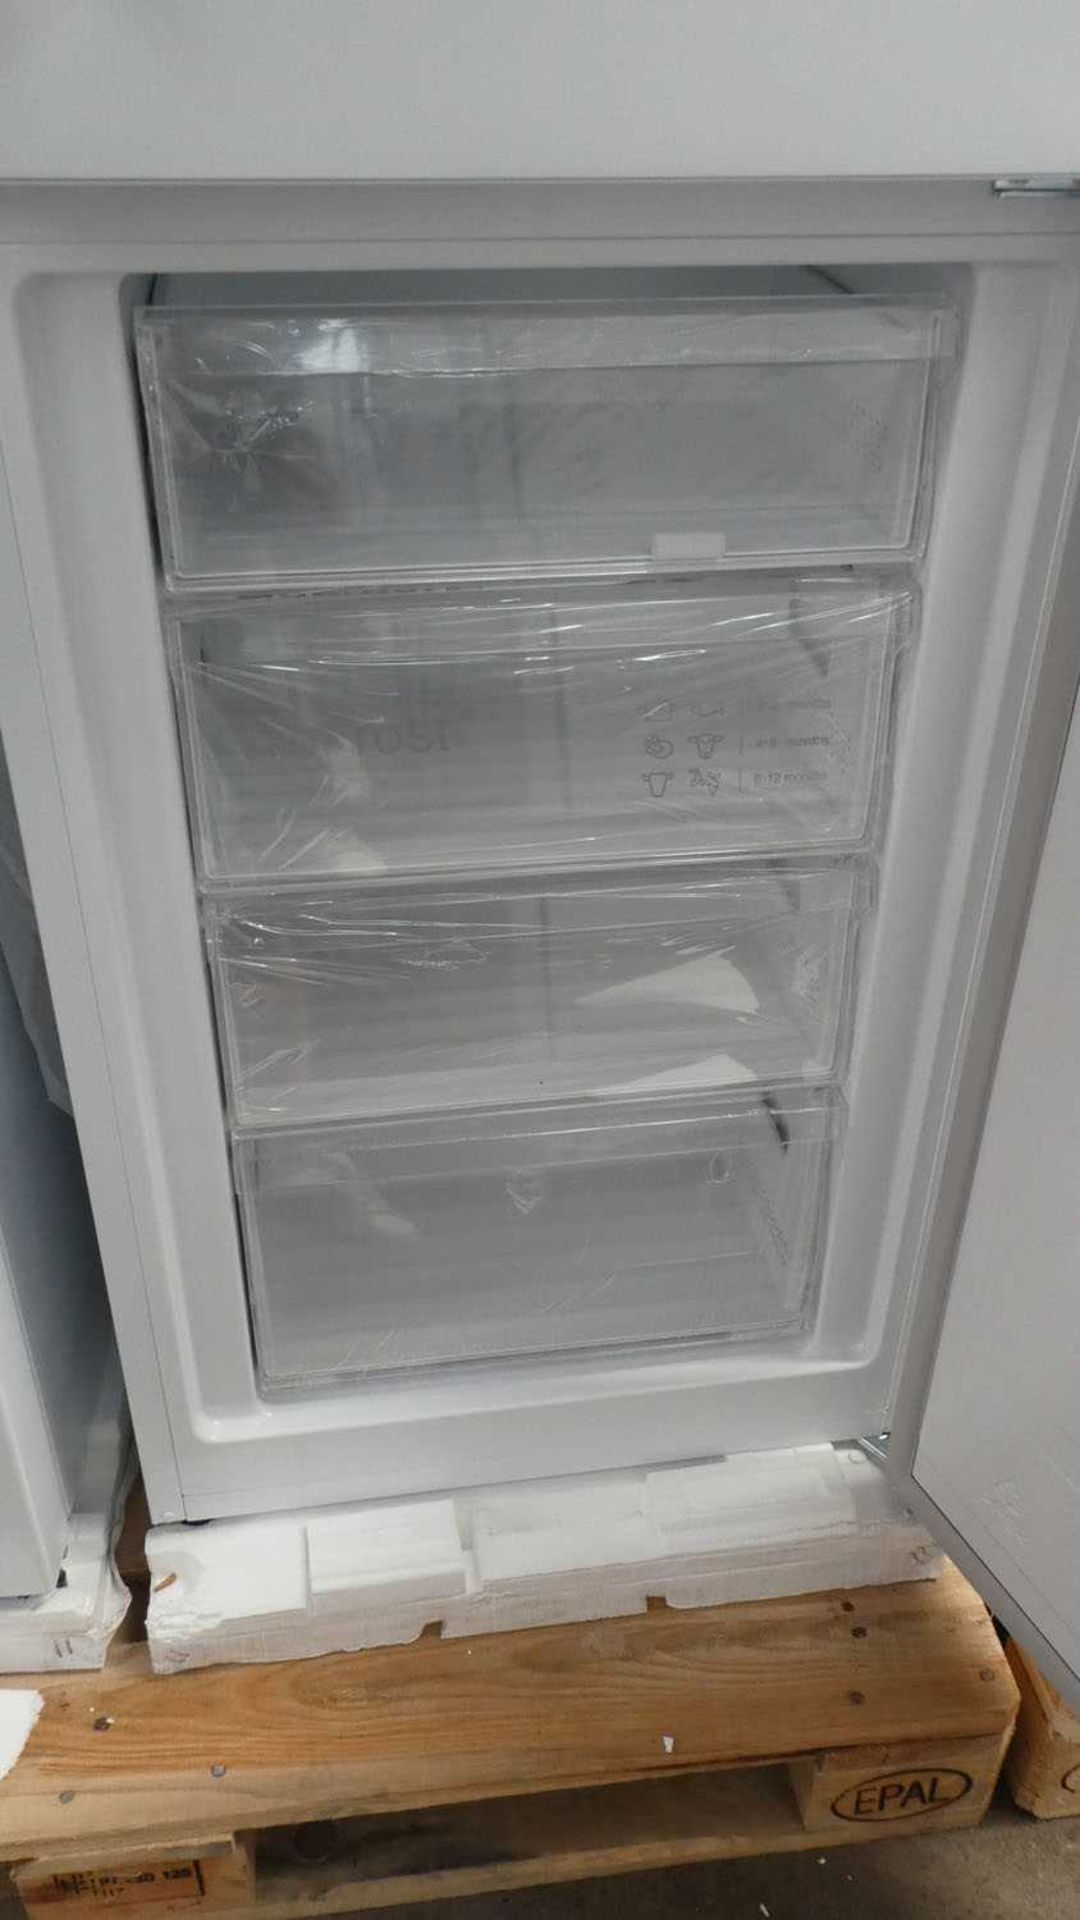 +VAT KGN27NWFAGB Bosch Free-standing fridge-freezer - Image 3 of 3